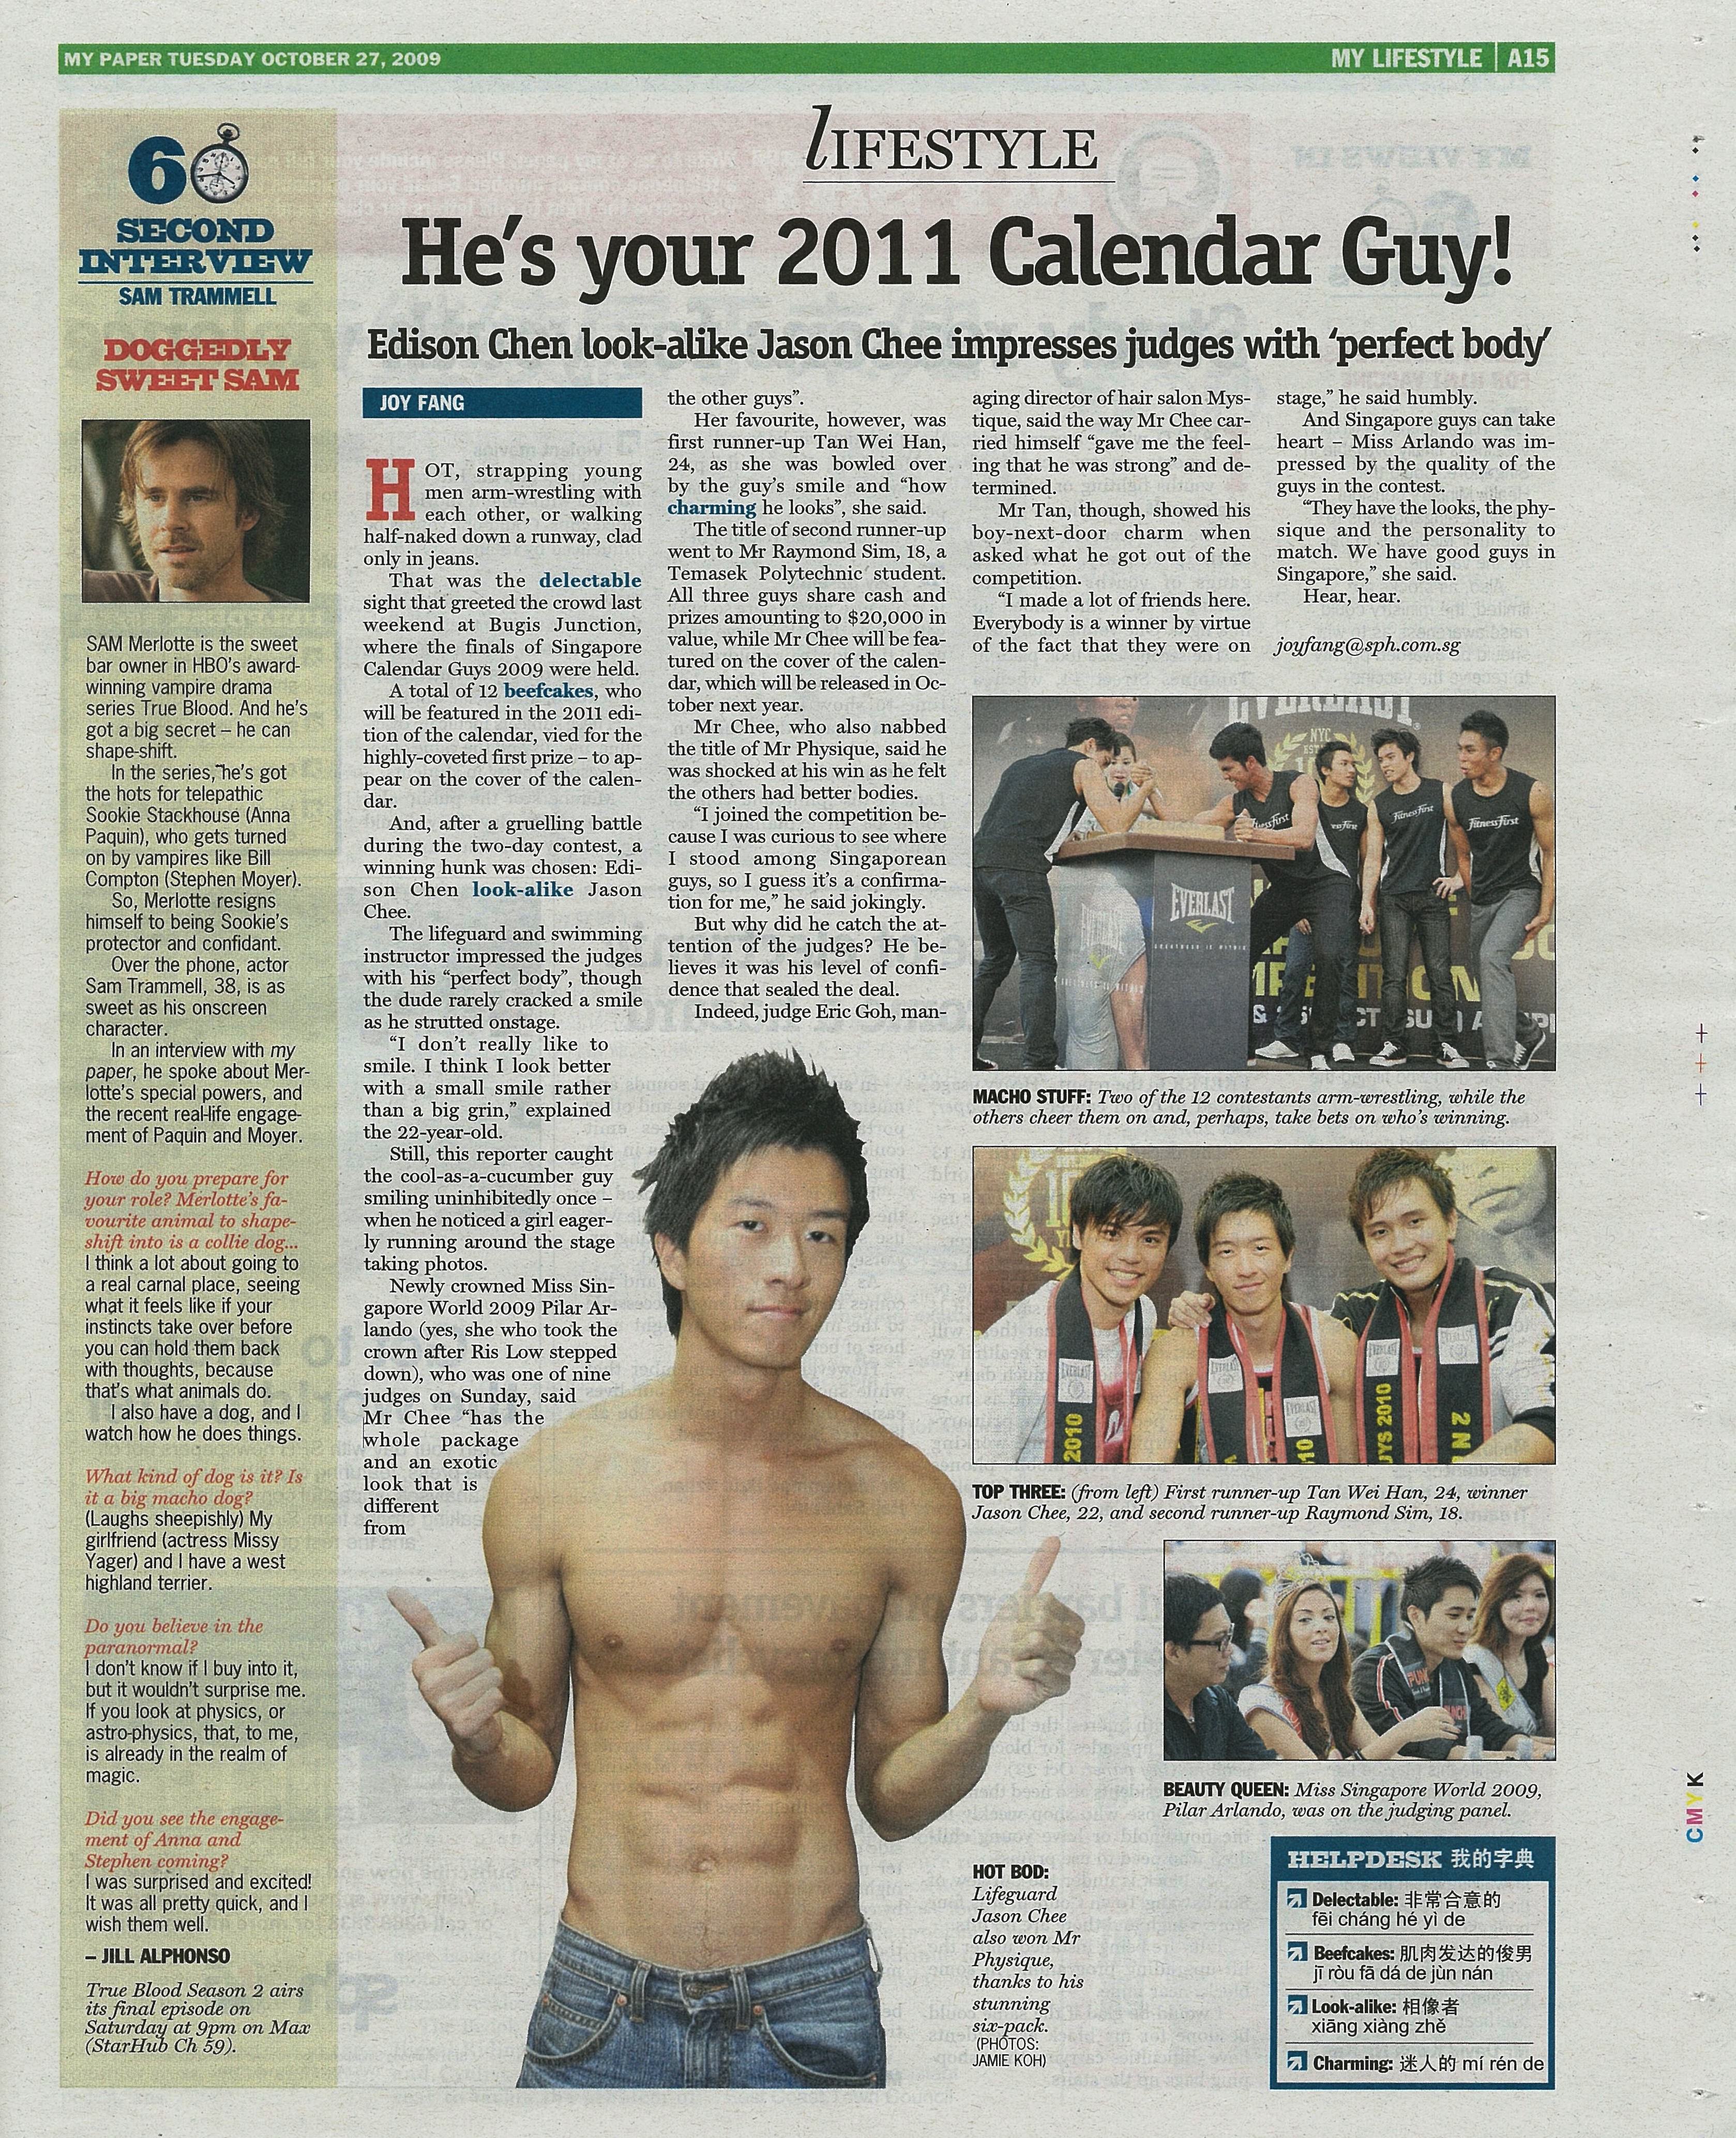 Singapore Calendar Guys News Article